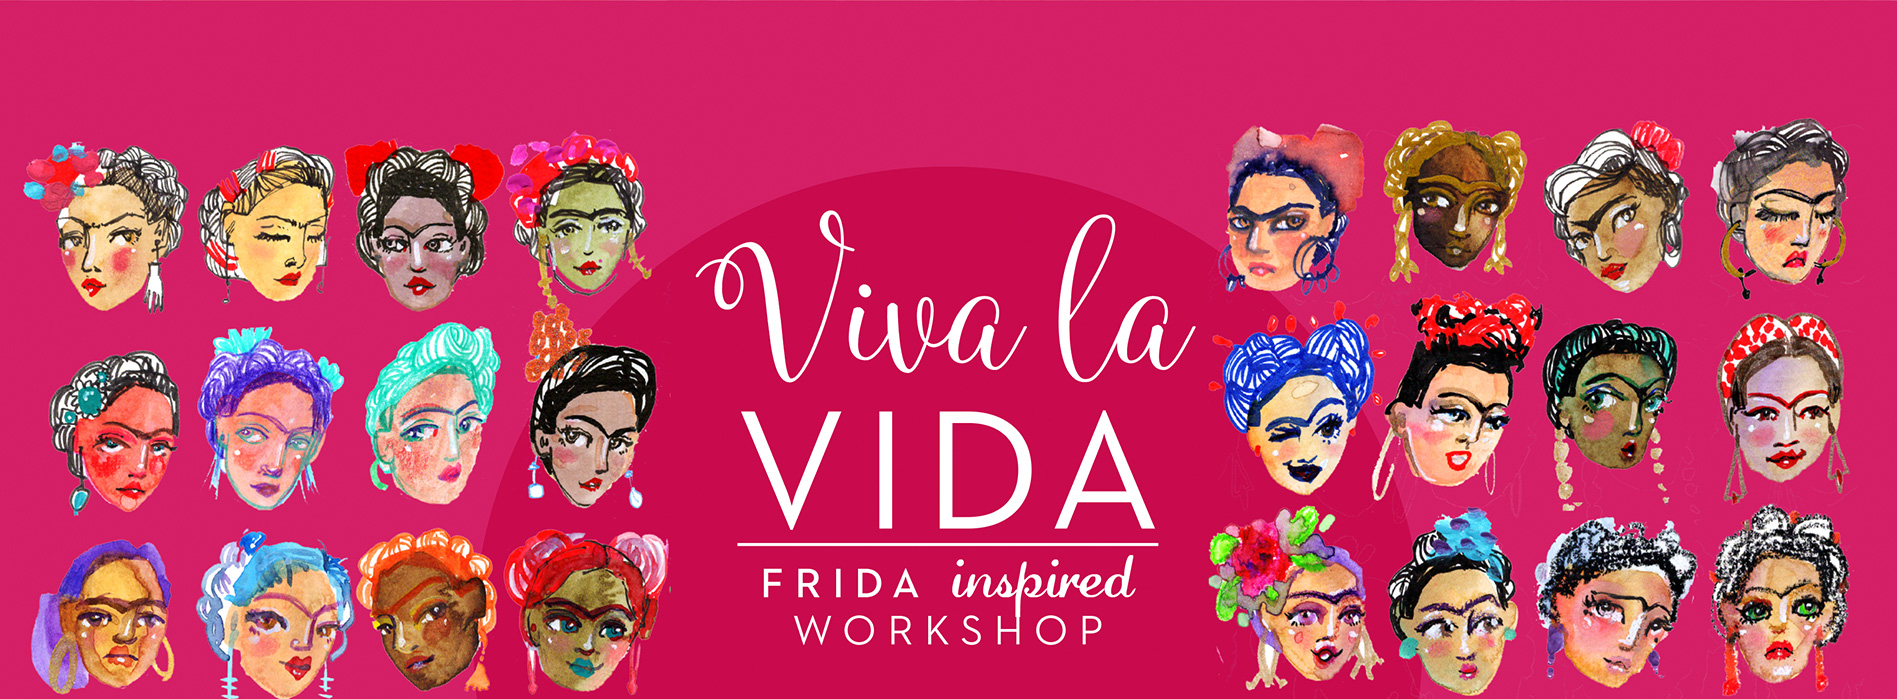 Viva la Vida : Frida Kahlo inspiration!